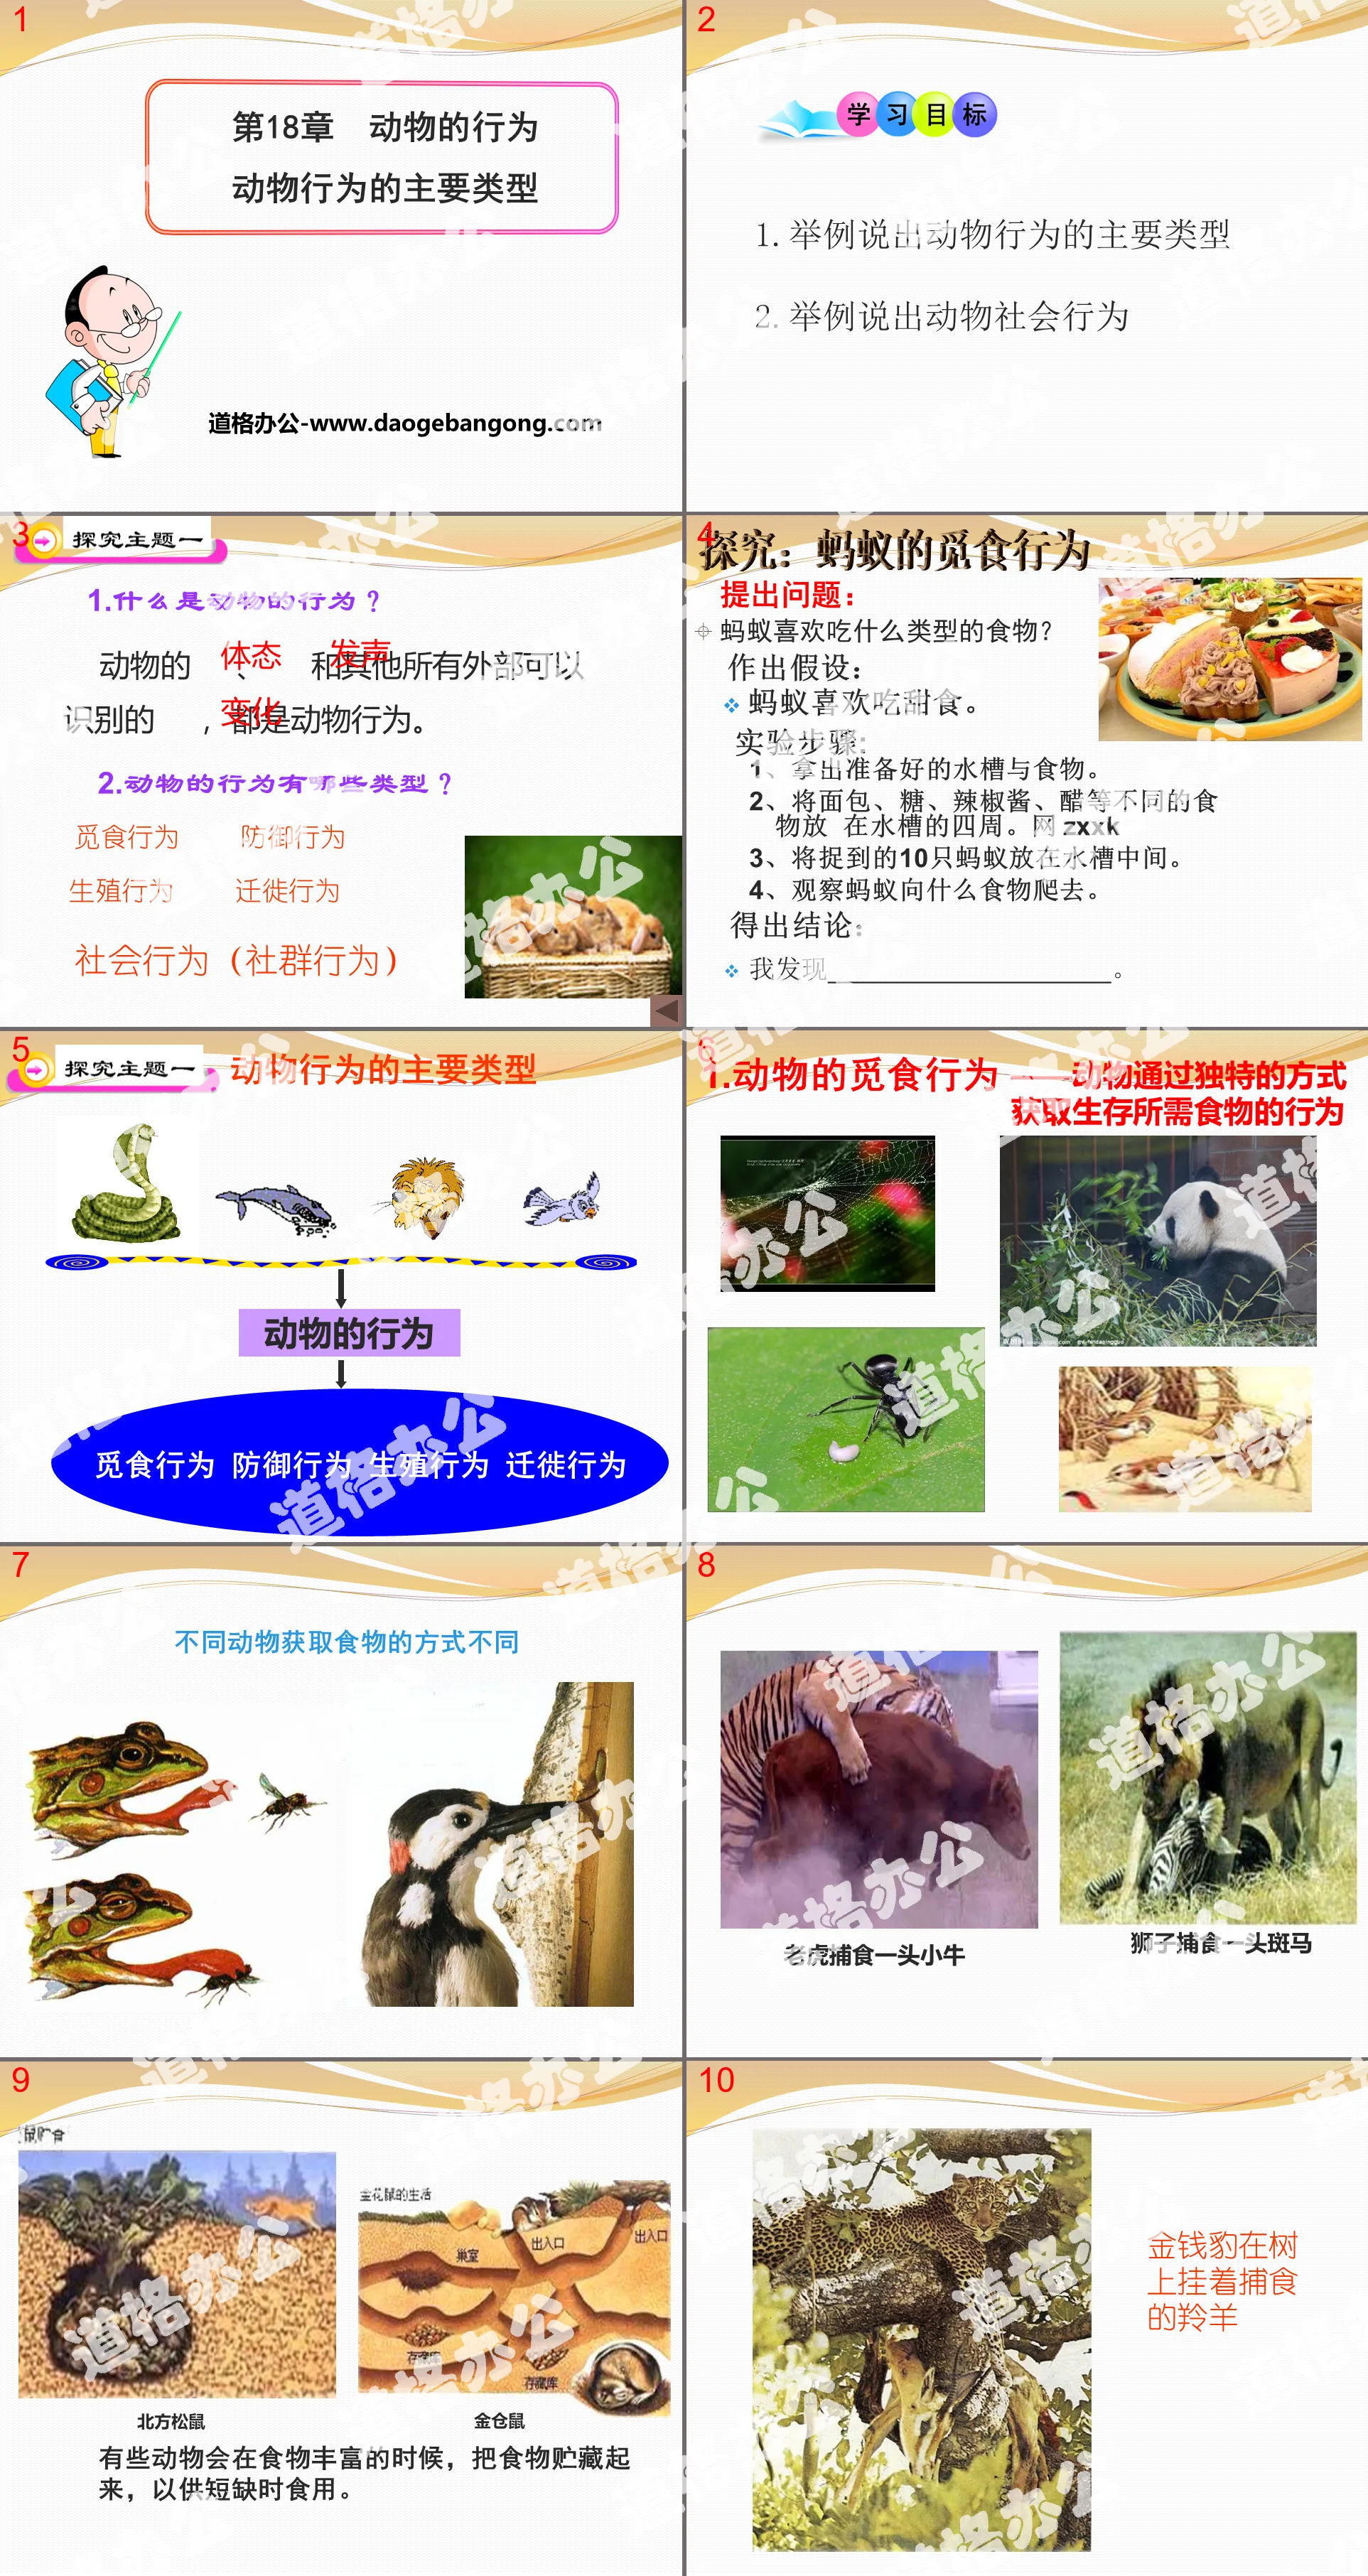 "Main Types of Animal Behavior" PPT courseware